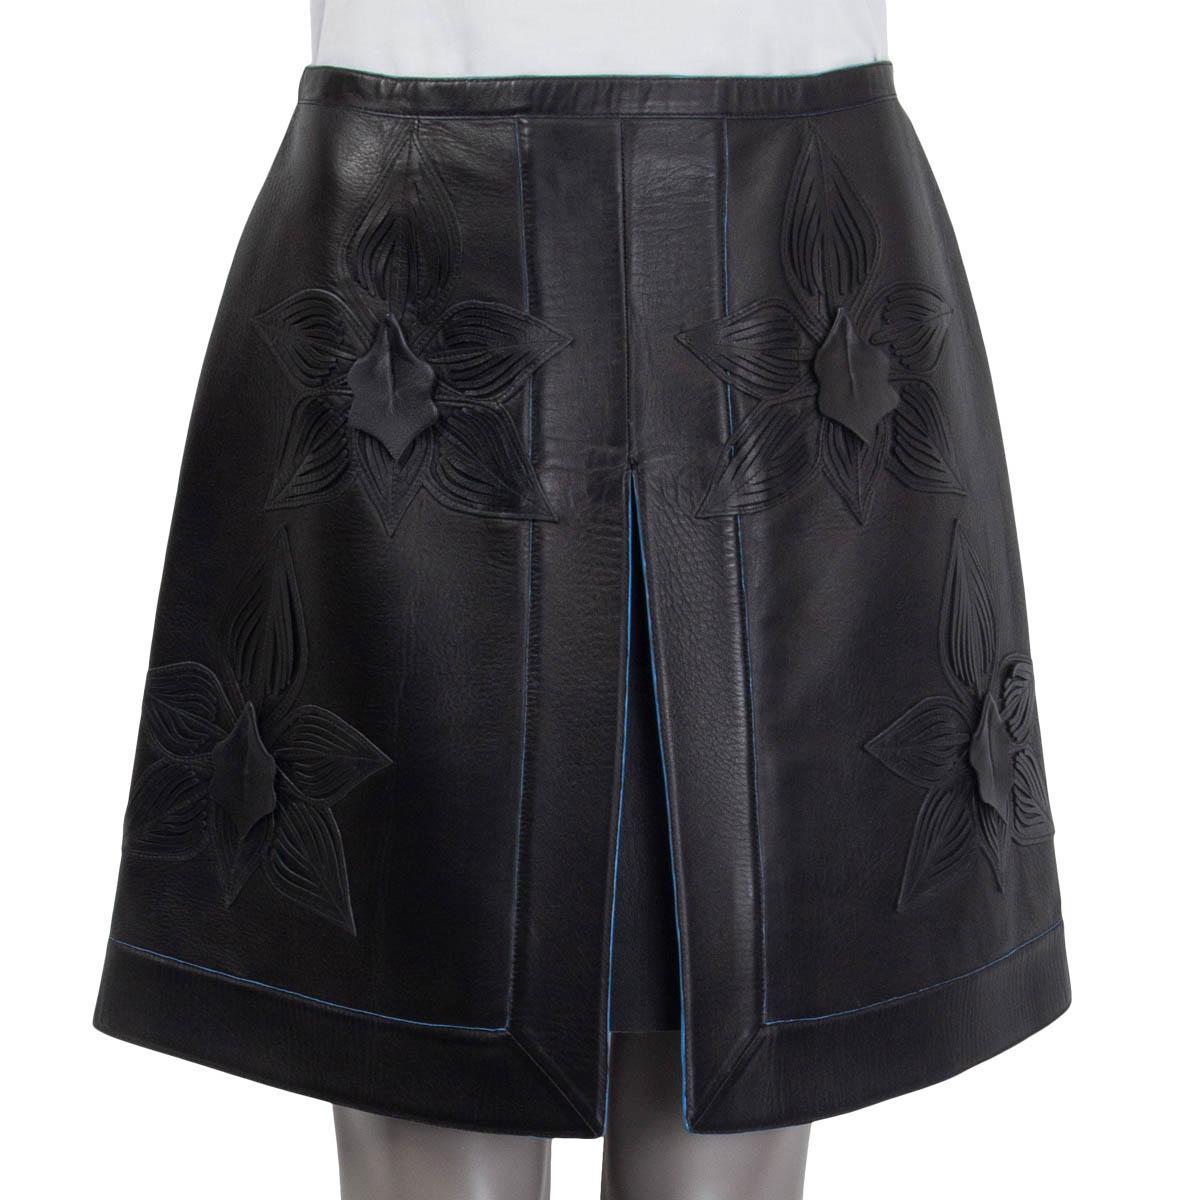 Black FENDI black leather FLORAL A-LINE Skirt 42 M